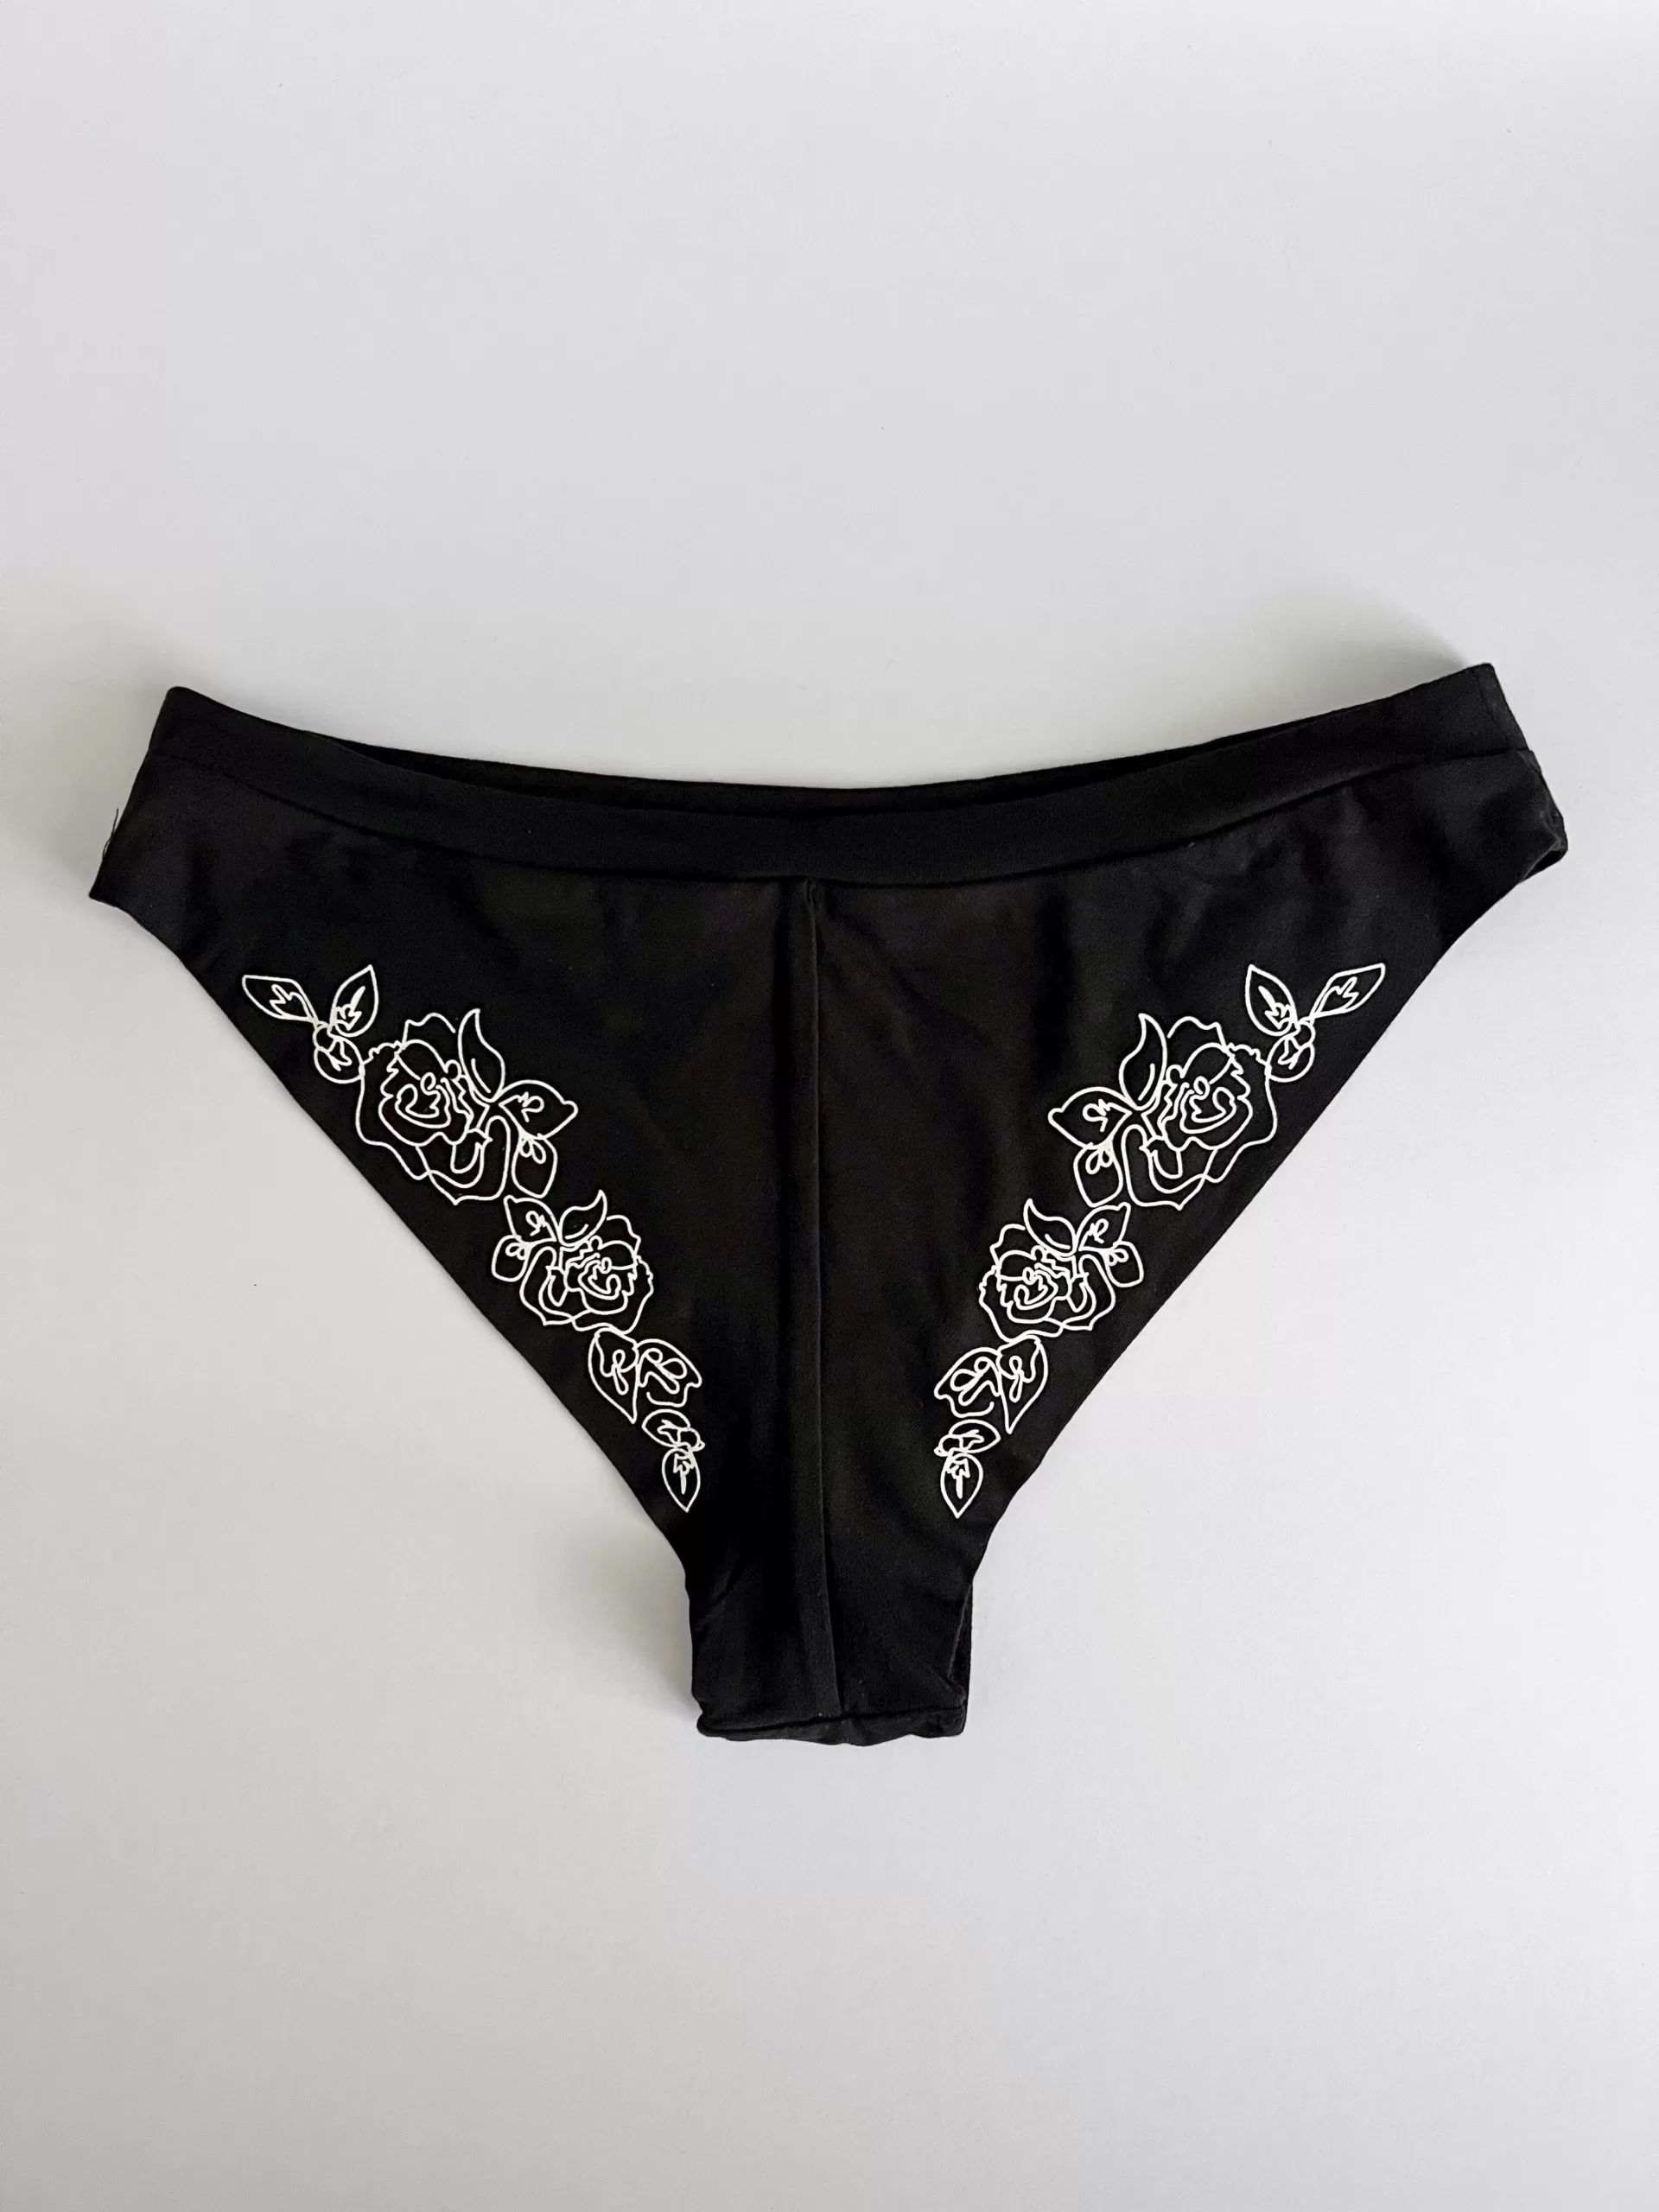 LOT NICE !!5 Women Bikini Panties Brief Floral Lace Cotton Underwear Size M  L XL